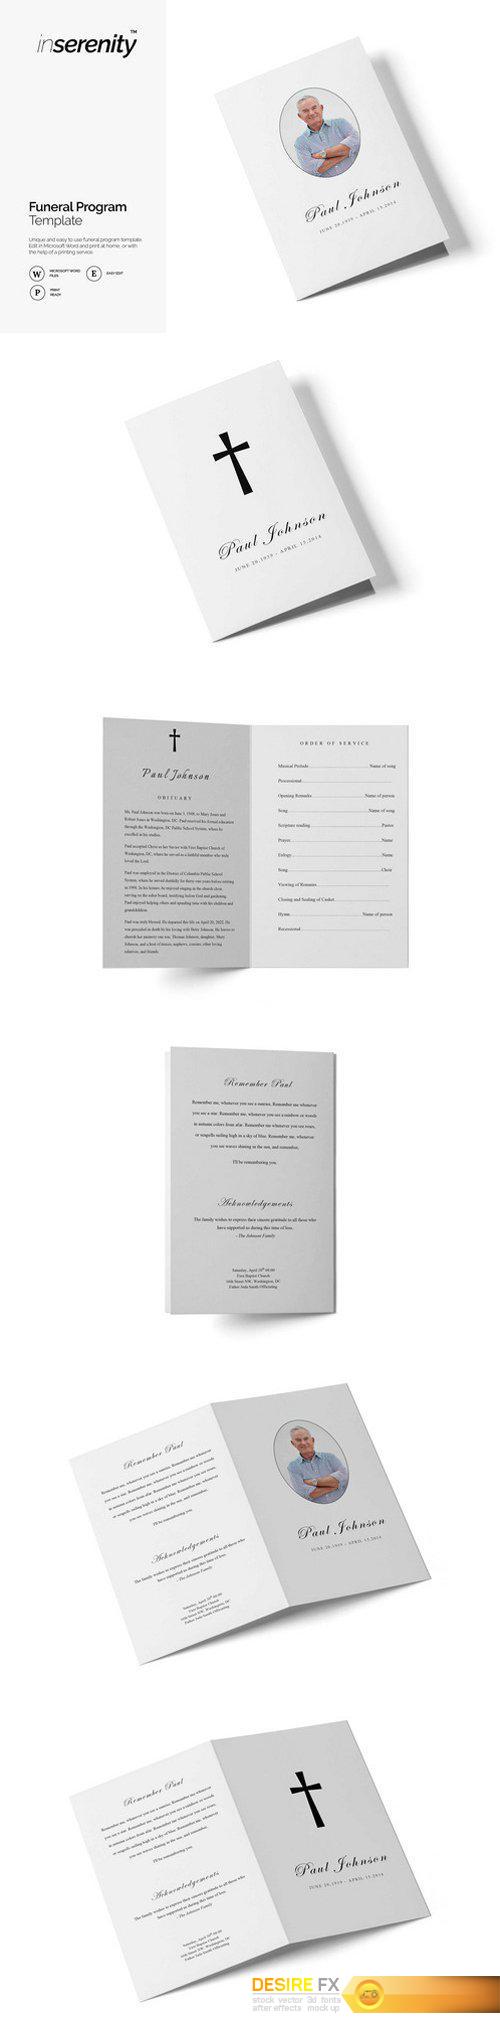 CM - Funeral program template | BI-fold 1825923